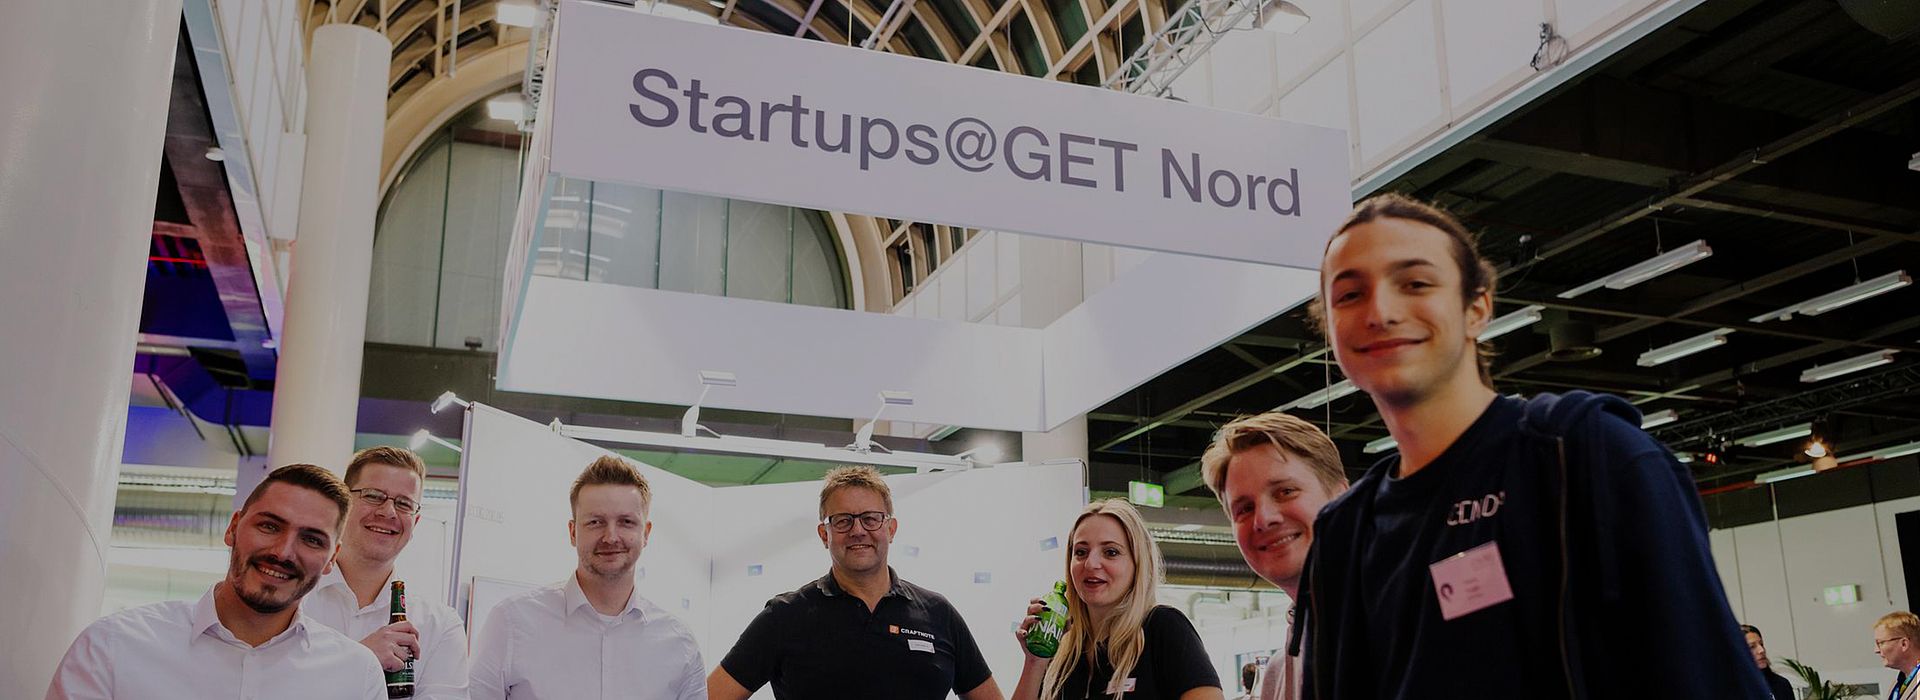 Startups @GET Nord